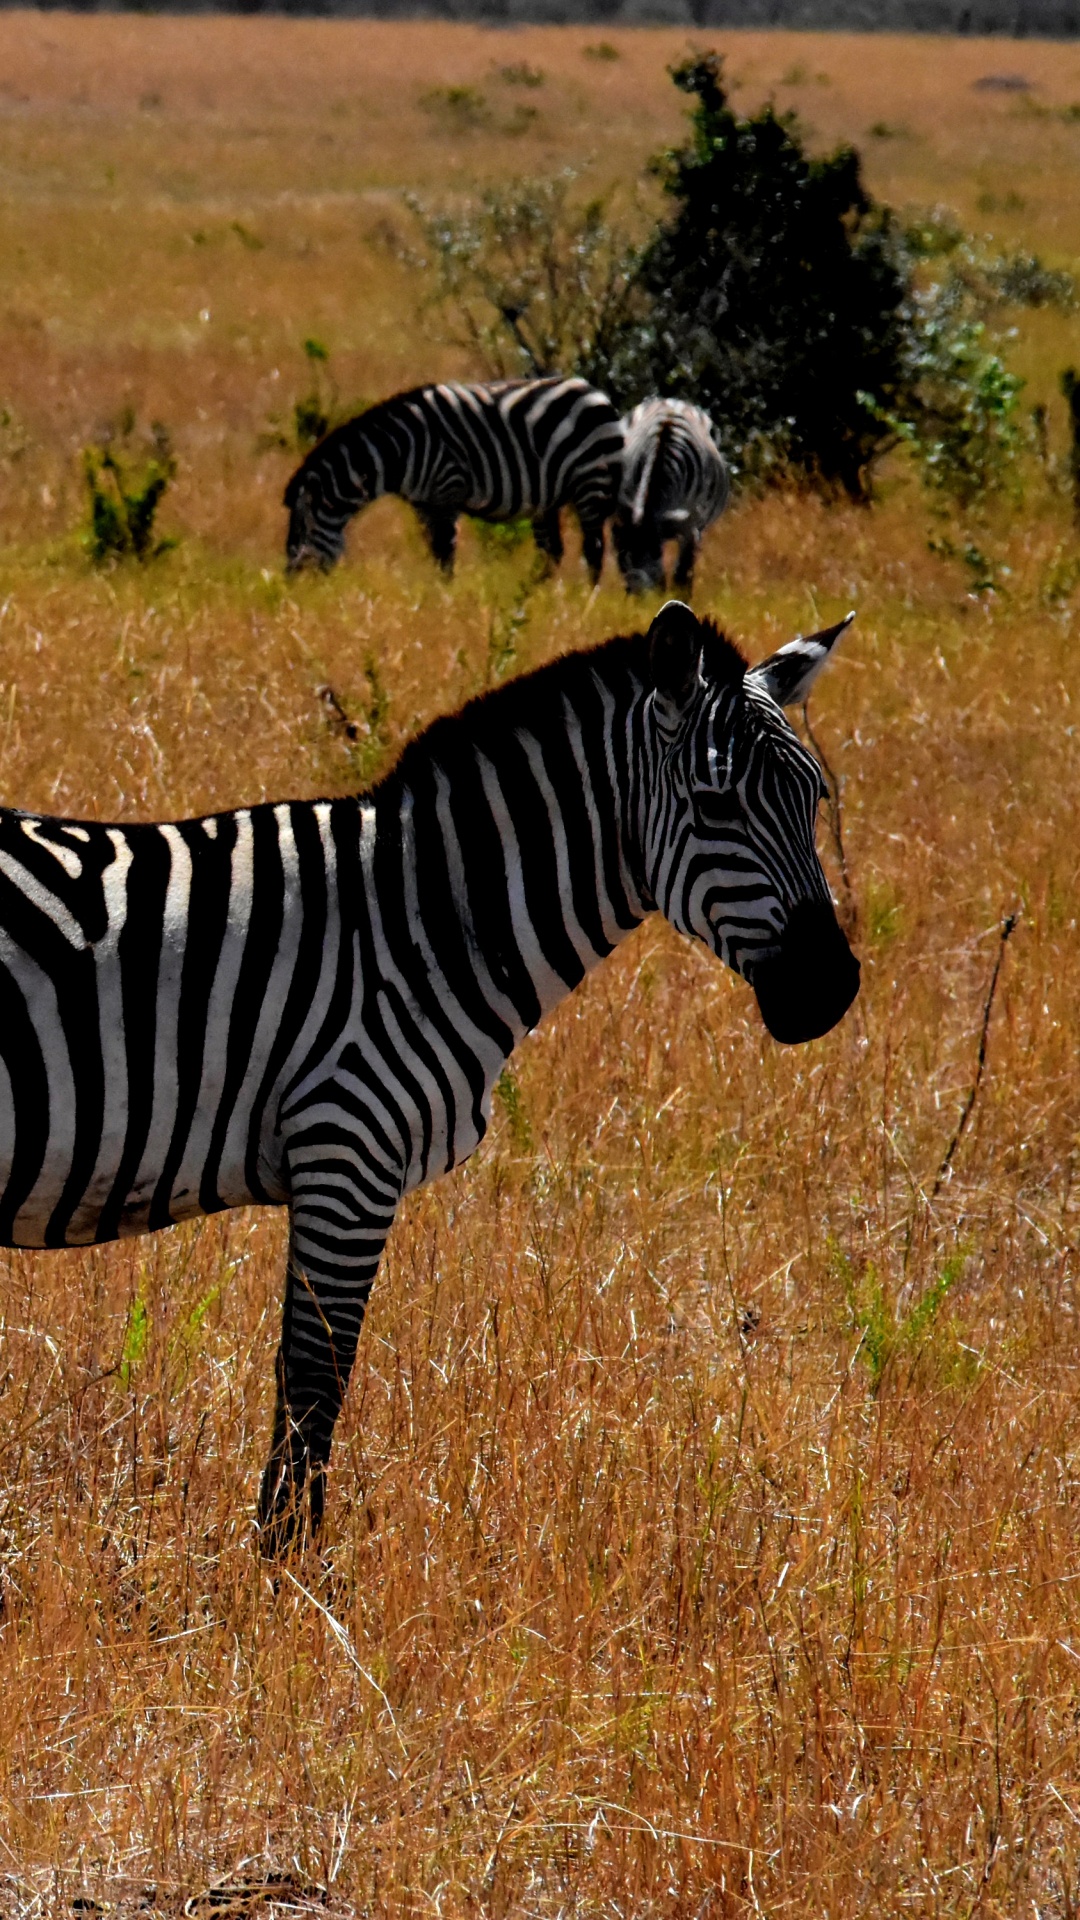 Zebra on Brown Grass Field During Daytime. Wallpaper in 1080x1920 Resolution